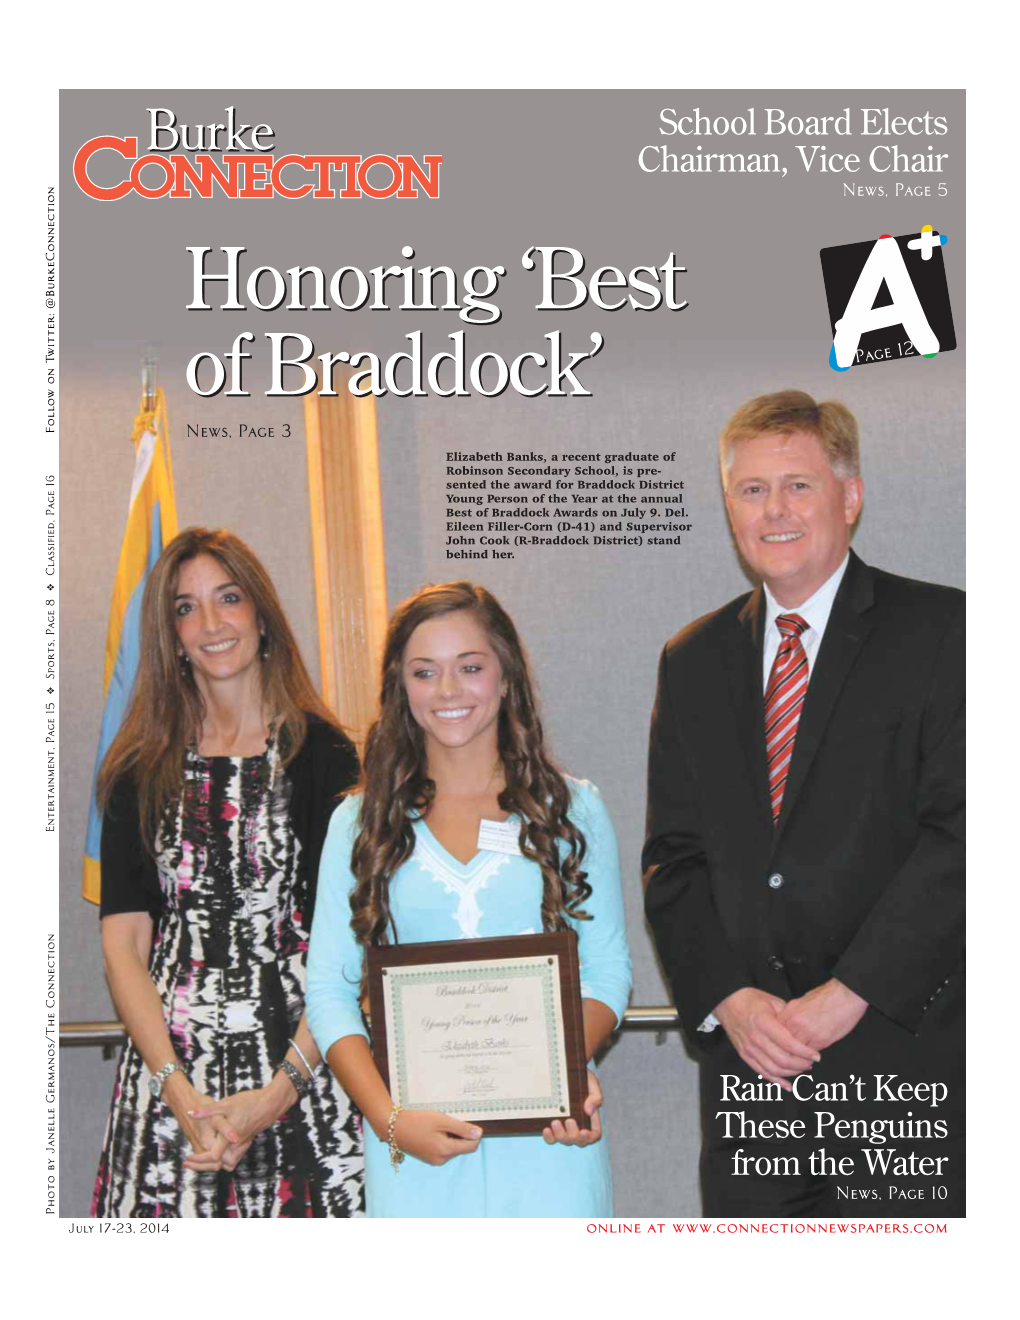 Burke School Board Elects Burke Chairman, Vice Chair News, Page 5 Honoringhonoring ‘Best‘Best Ofof Braddock’Braddock’ Page 12